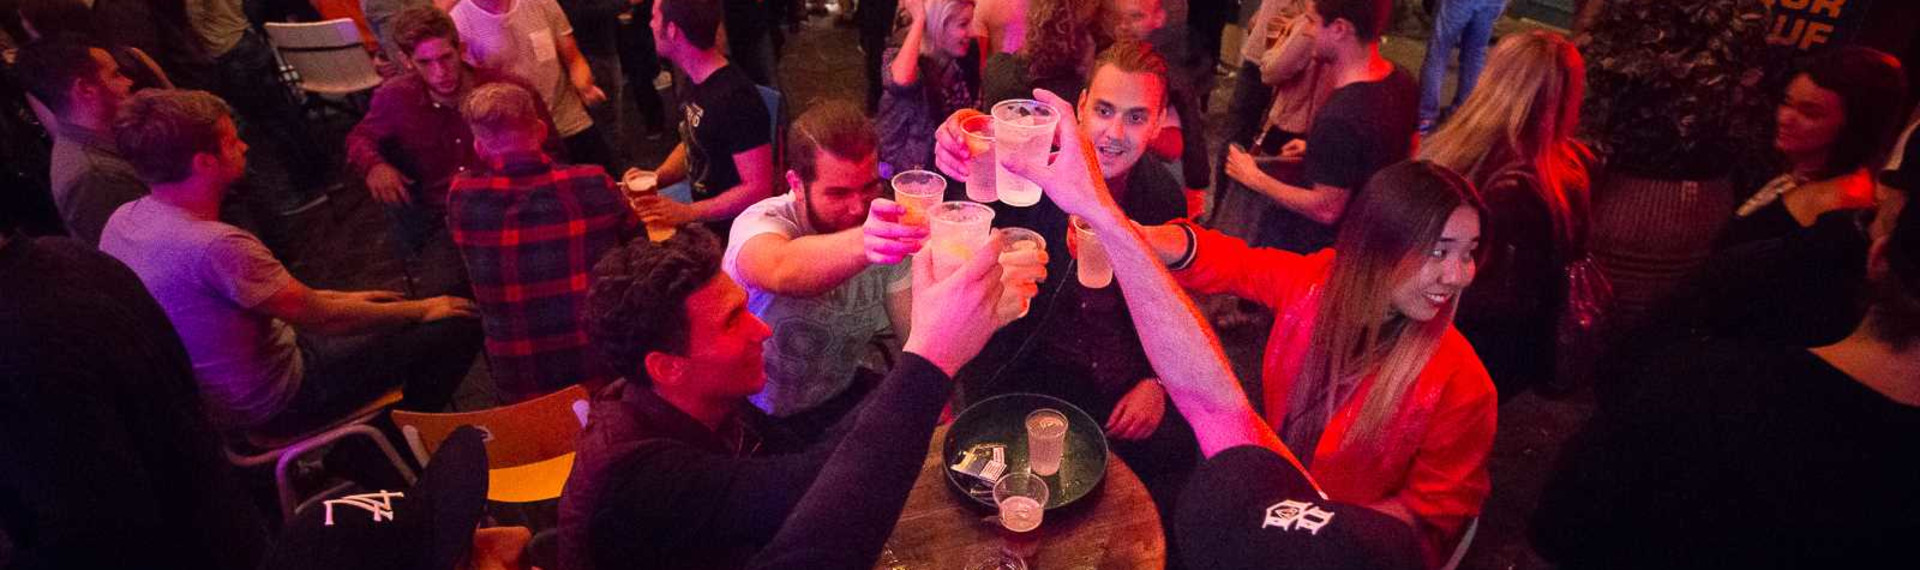 Pub Crawl mit Bier-Flatrate Budapest | Jetzt buchen!